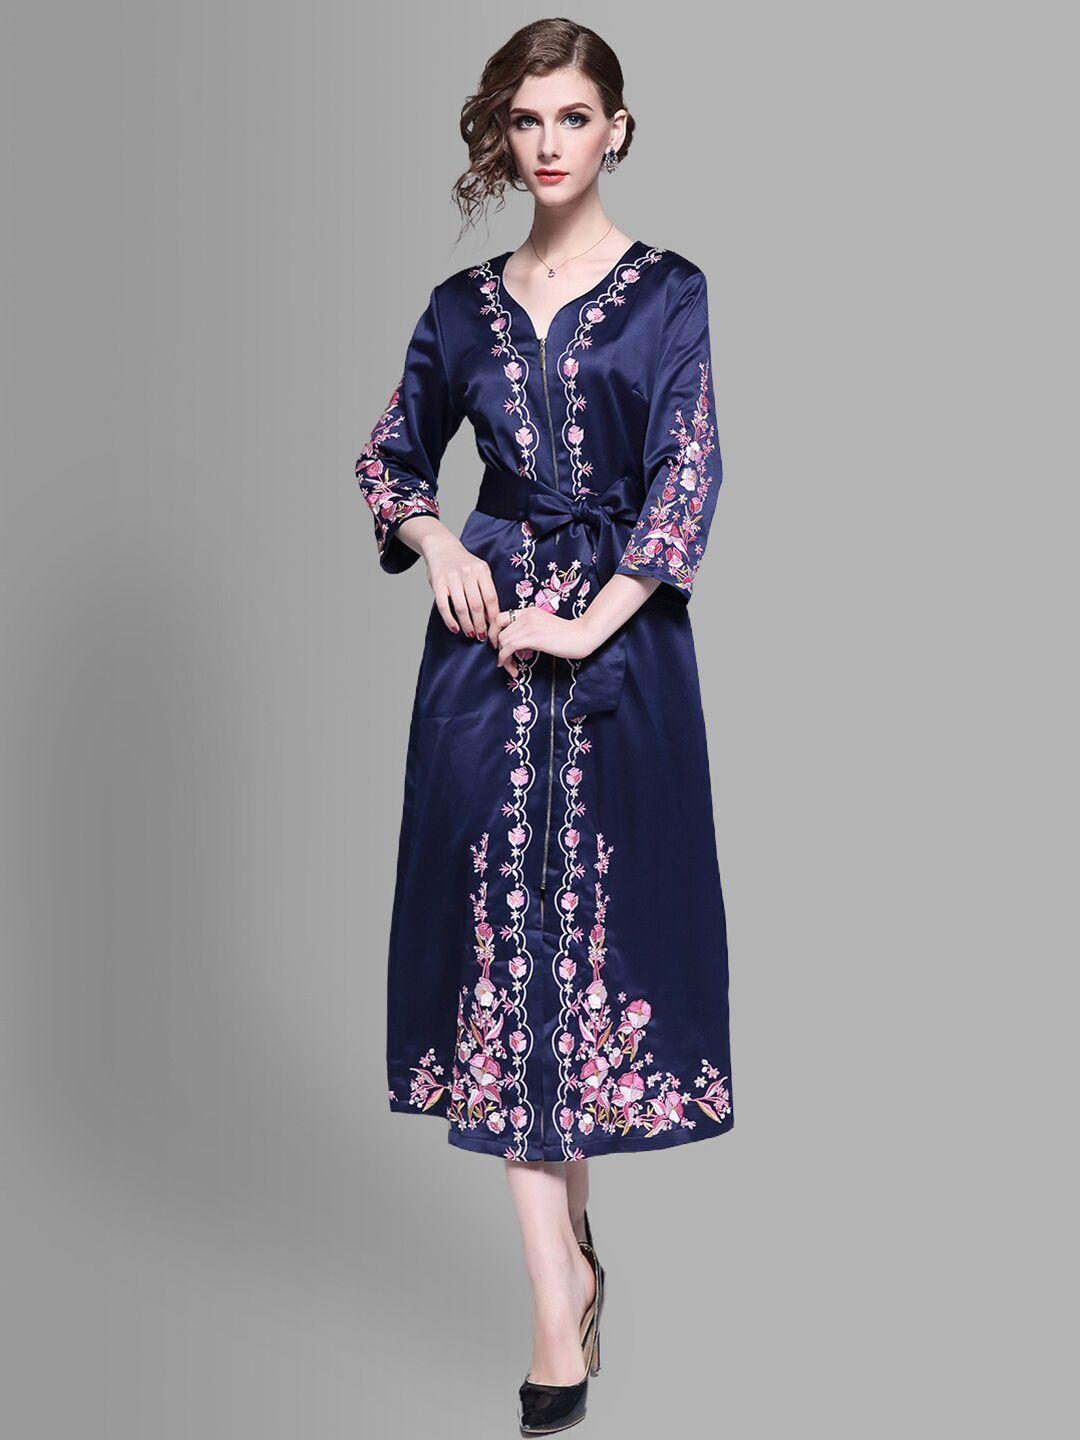 jc collection navy blue ethnic motifs ethnic a-line midi dress